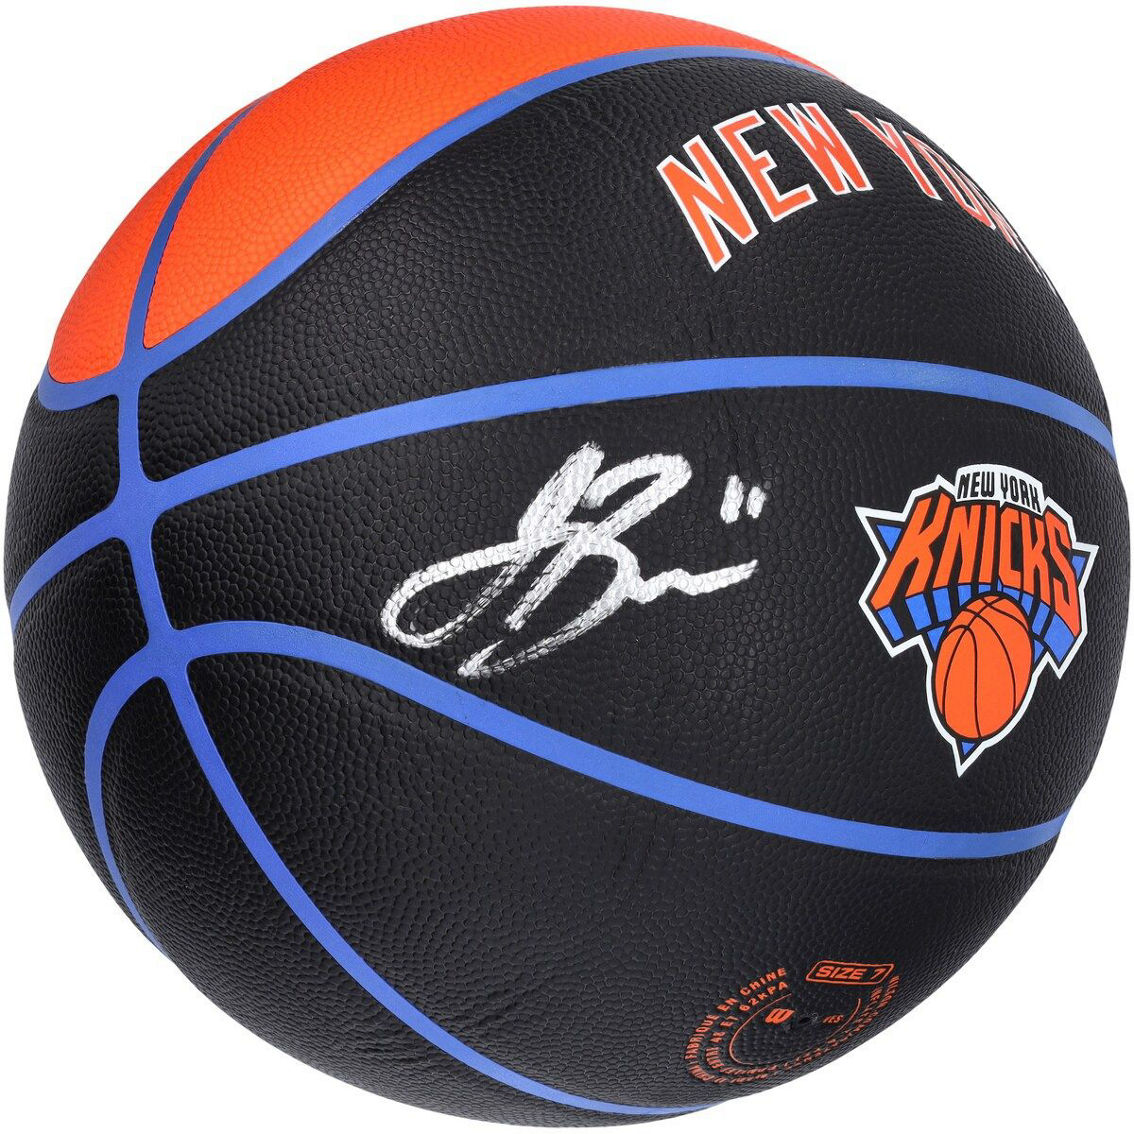 Fanatics Authentic Jalen Brunson New York Knicks Autographed Wilson City Edition Collectors Basketball - Image 2 of 4